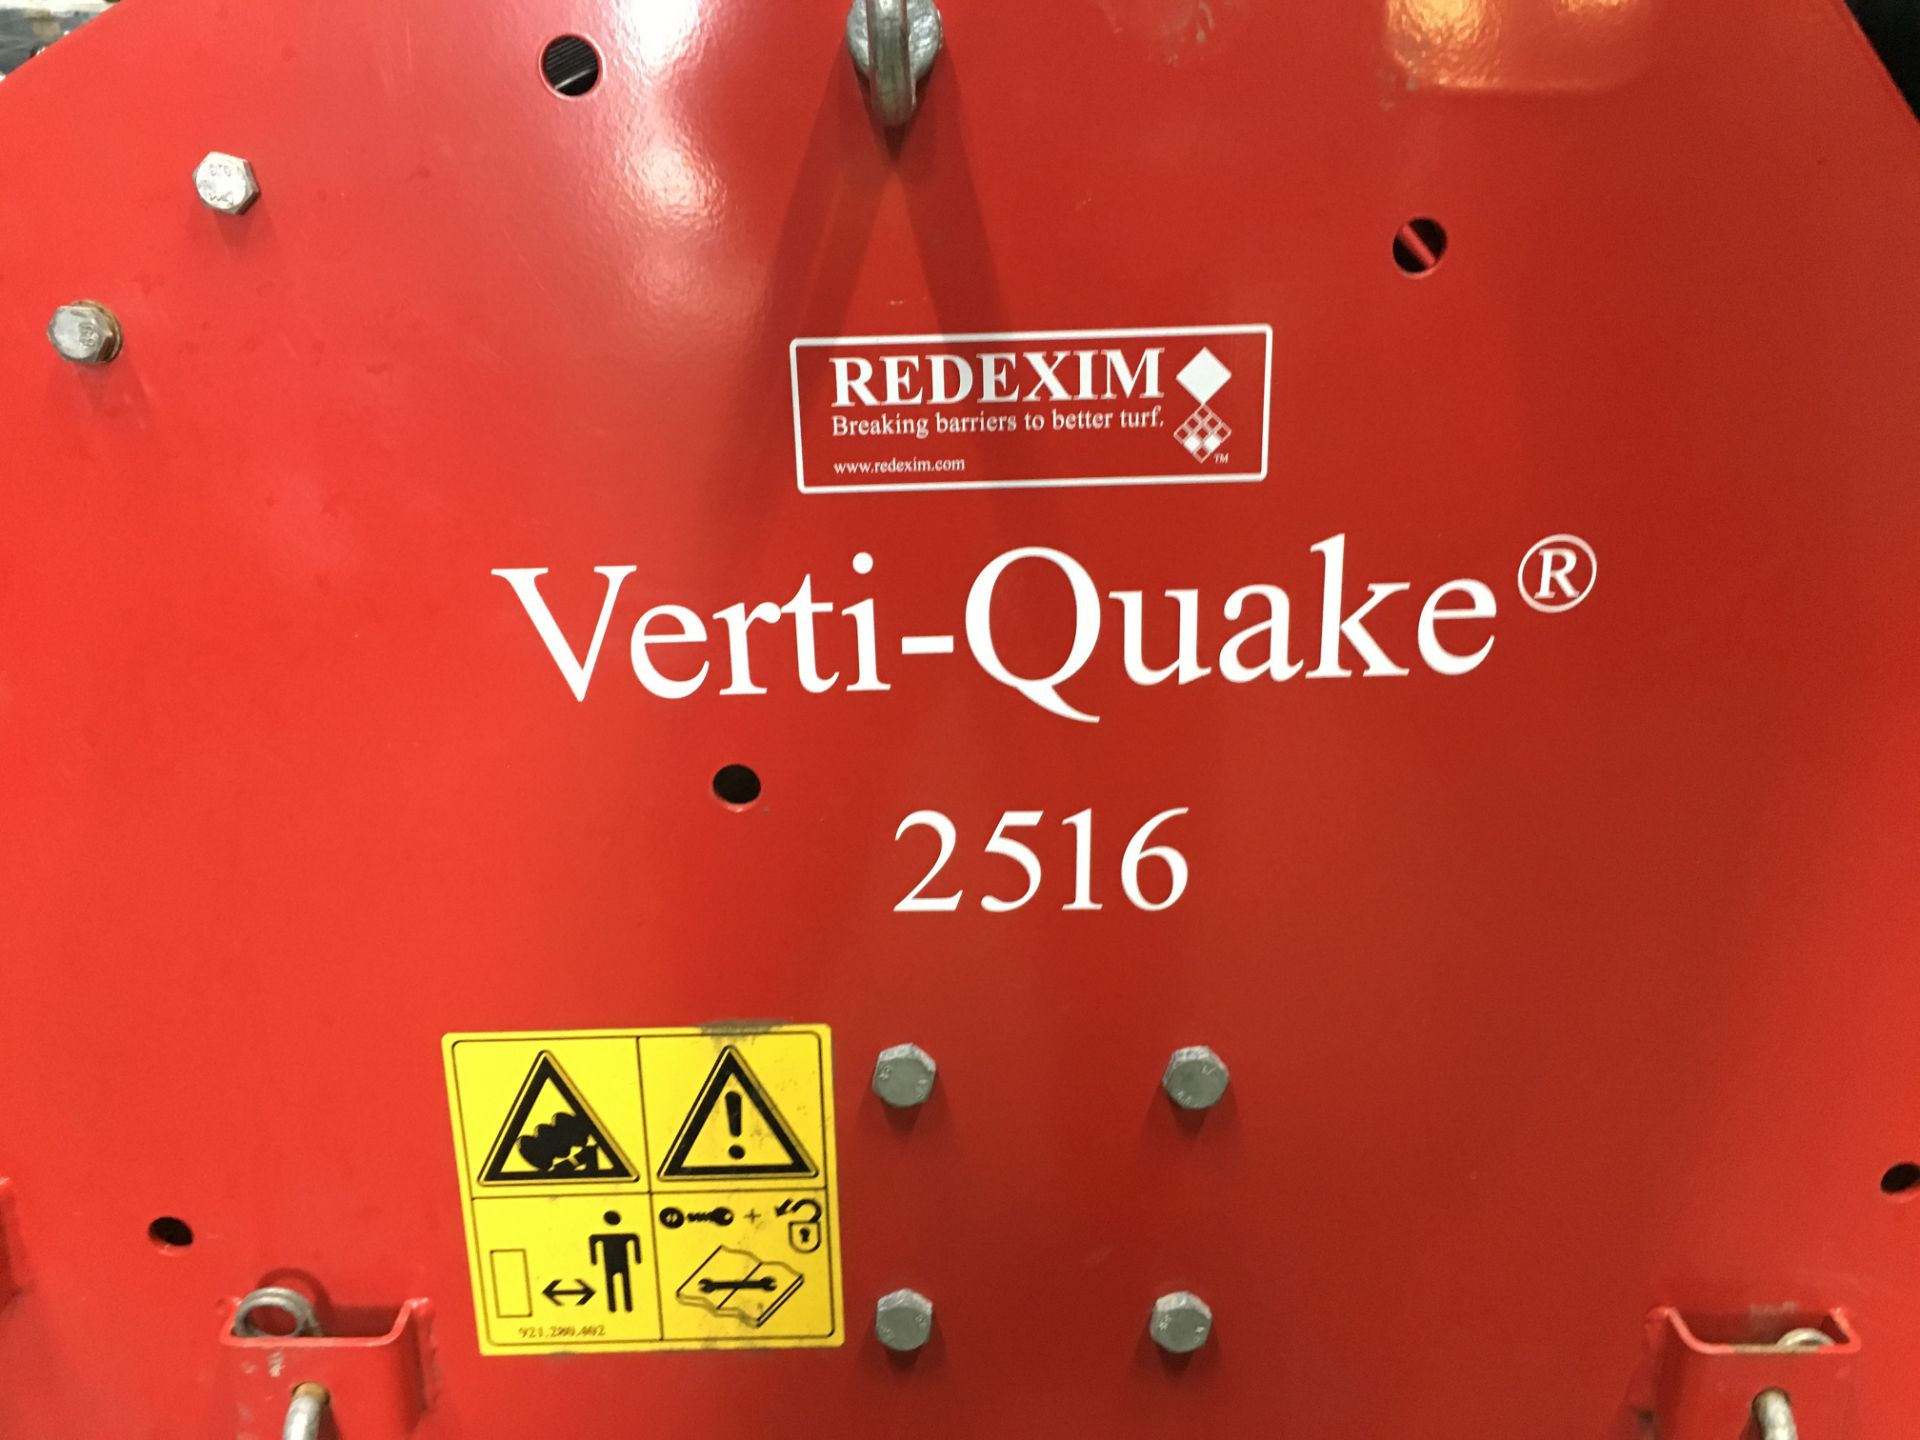 Redexim Verti-Quake 2516 Rotary Aerator | YOM: 2016 - Image 4 of 5